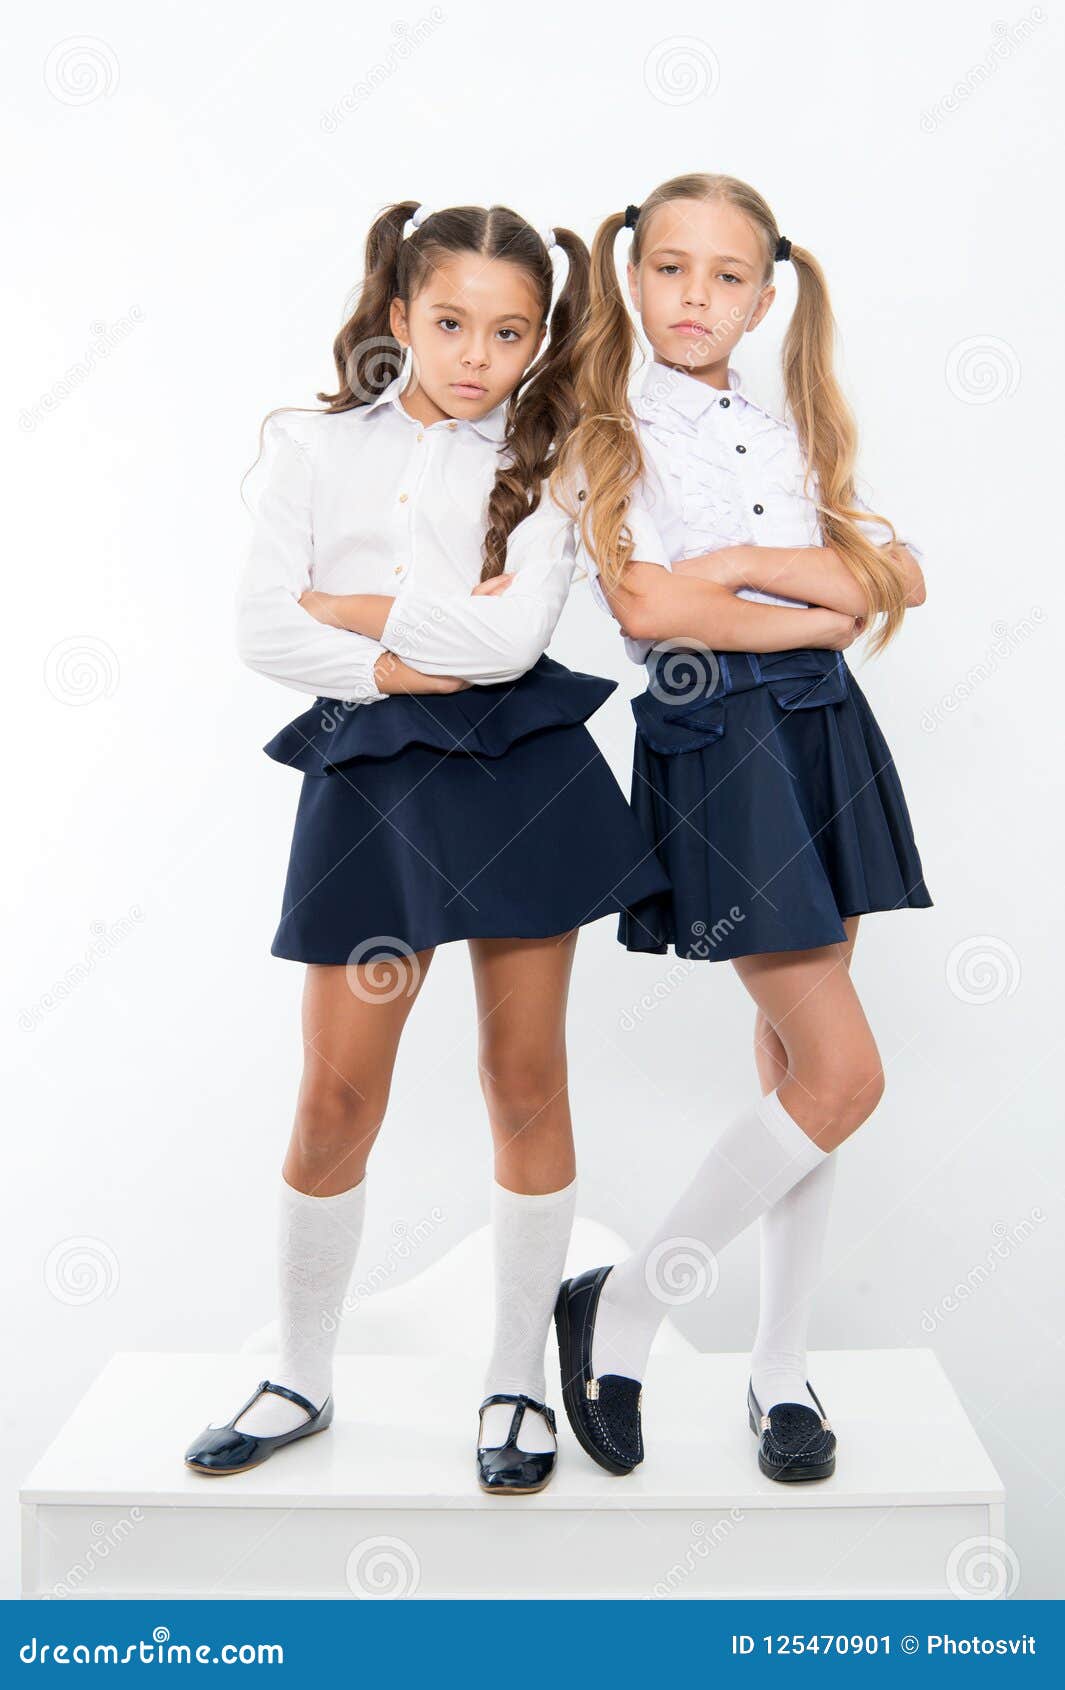 Schoolgirls Haughty Arrogant with Ponytails Hairstyle. Best Friends  Excellent Pupils Stock Image - Image of classmates, friendship: 125470901